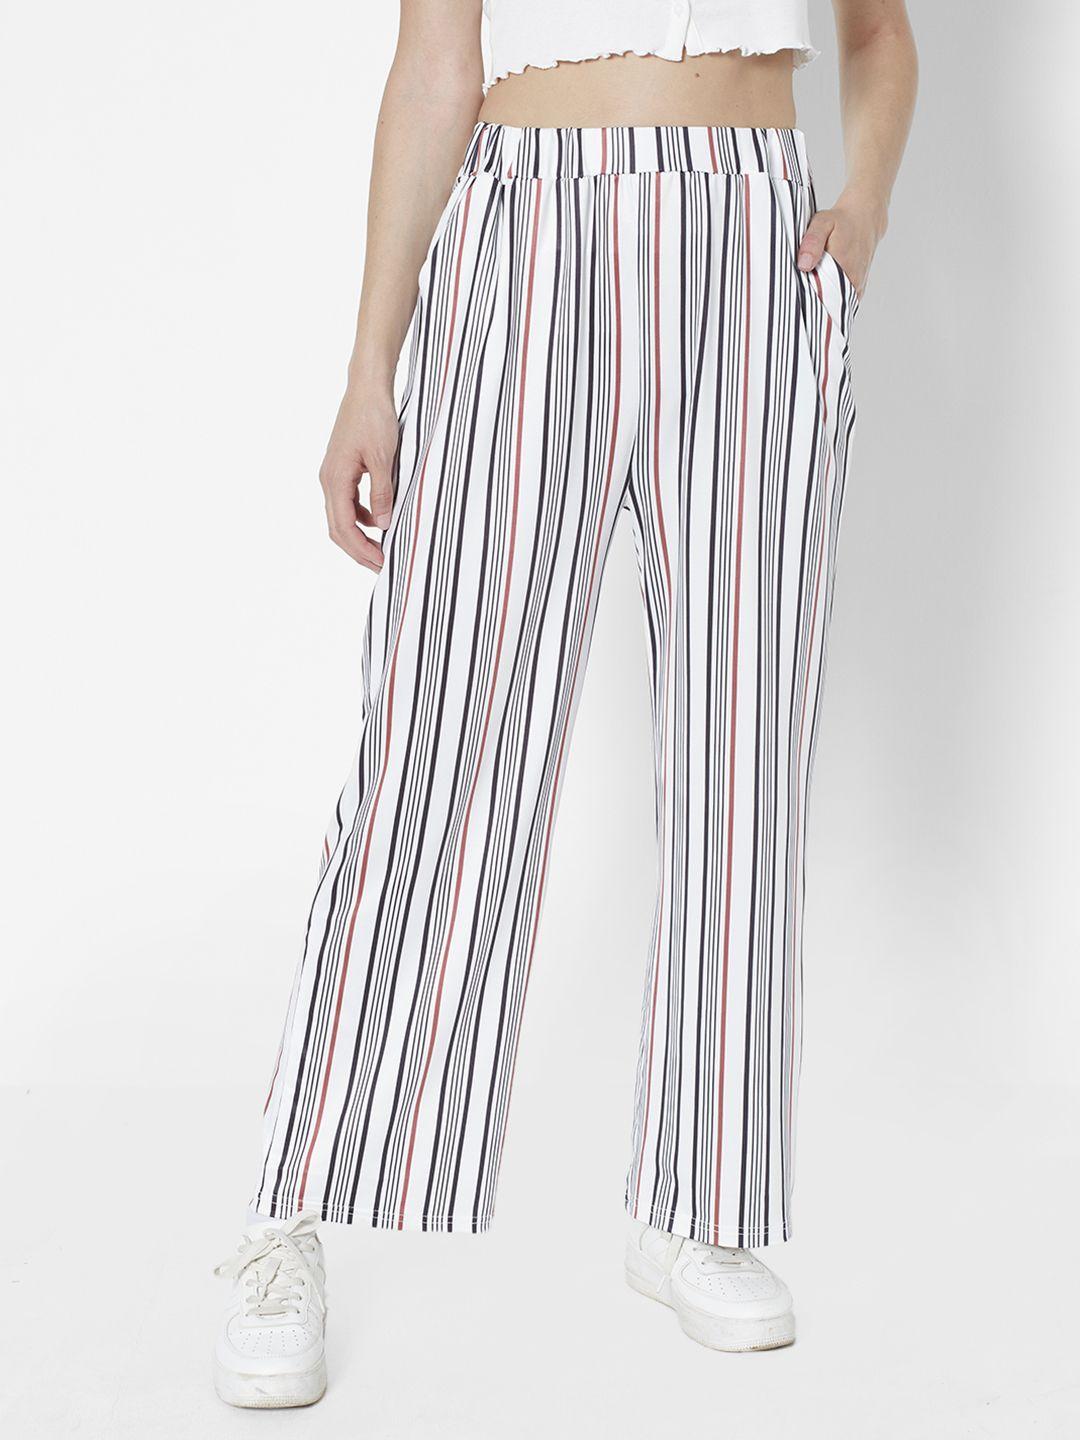 urbanic women white & black striped trousers